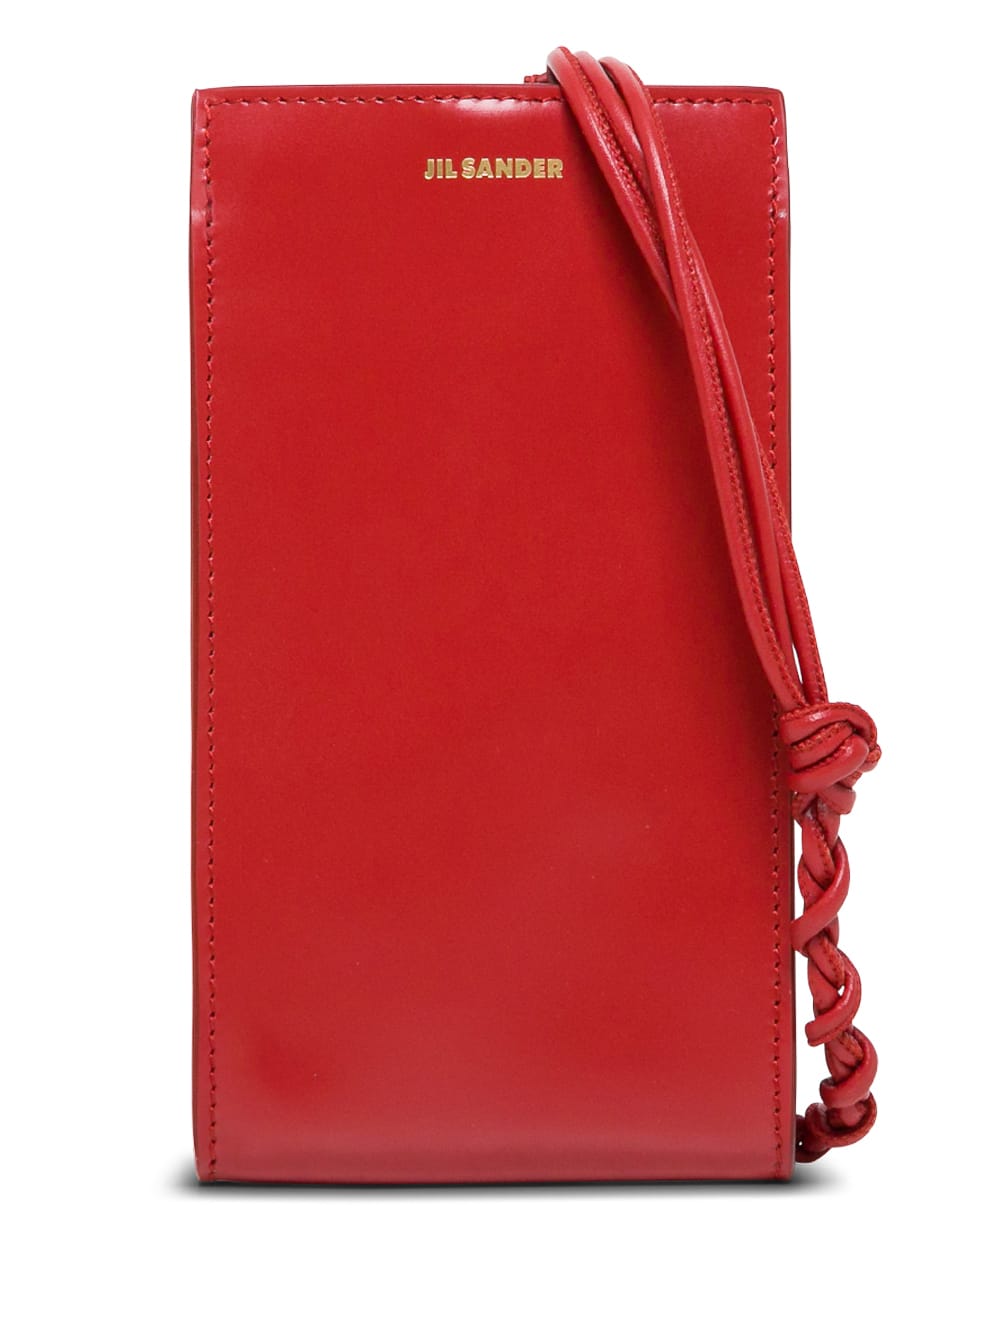 Jil Sander Tangle Red Leather Crossbody Bag For Smartphone